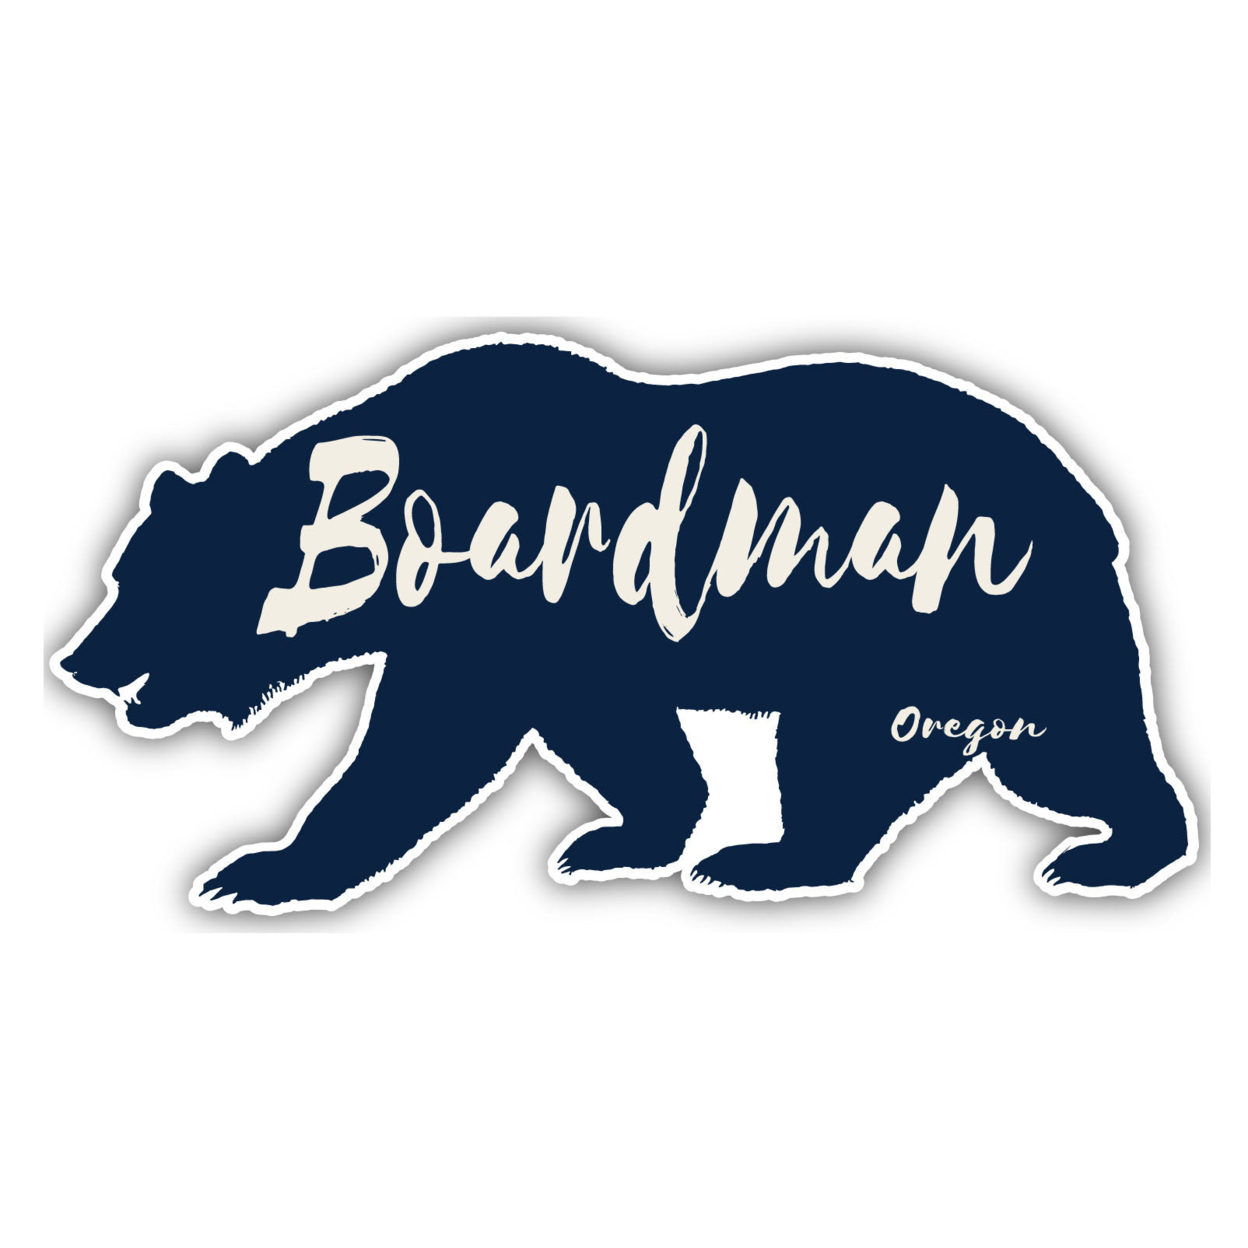 Boardman Oregon Souvenir Decorative Stickers (Choose Theme And Size) - Single Unit, 8-Inch, Camp Life